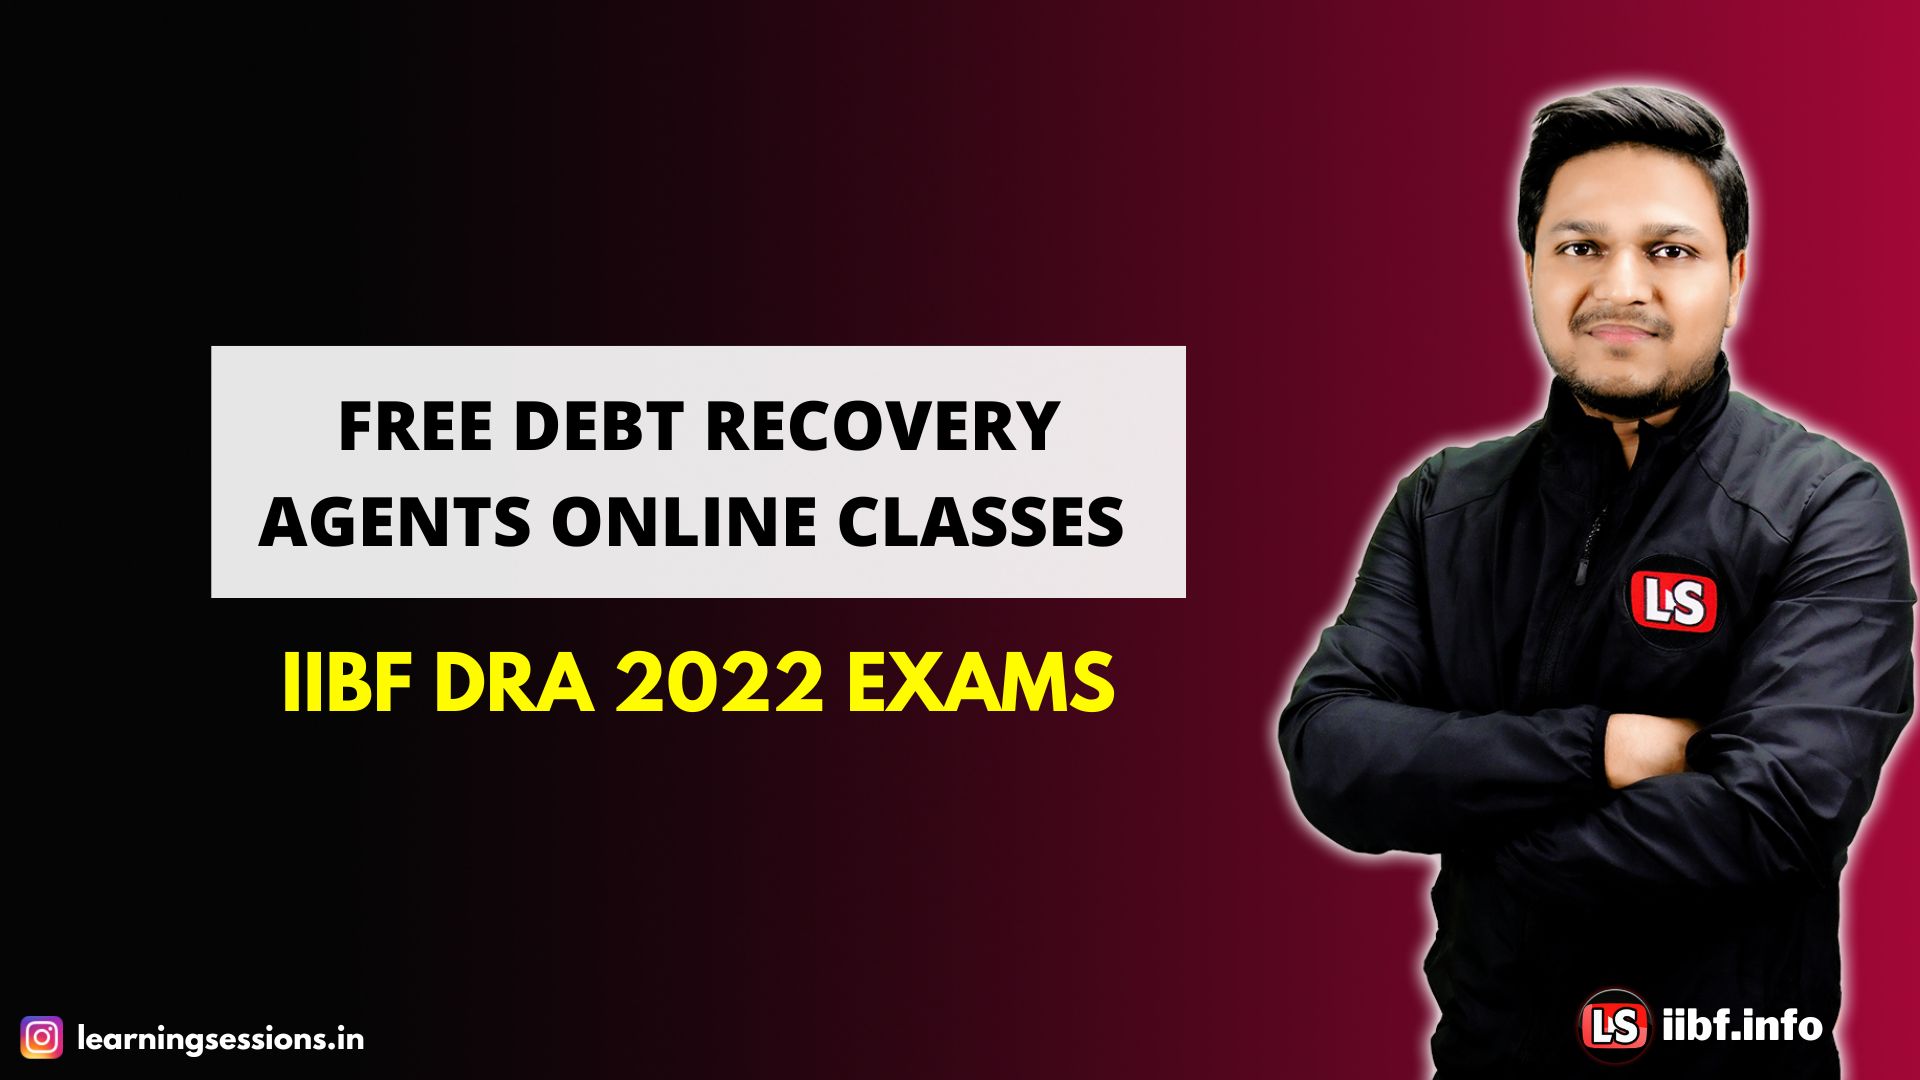 Free Debt Recovery Agents Online Classes | IIBF Dra 2022 Exams